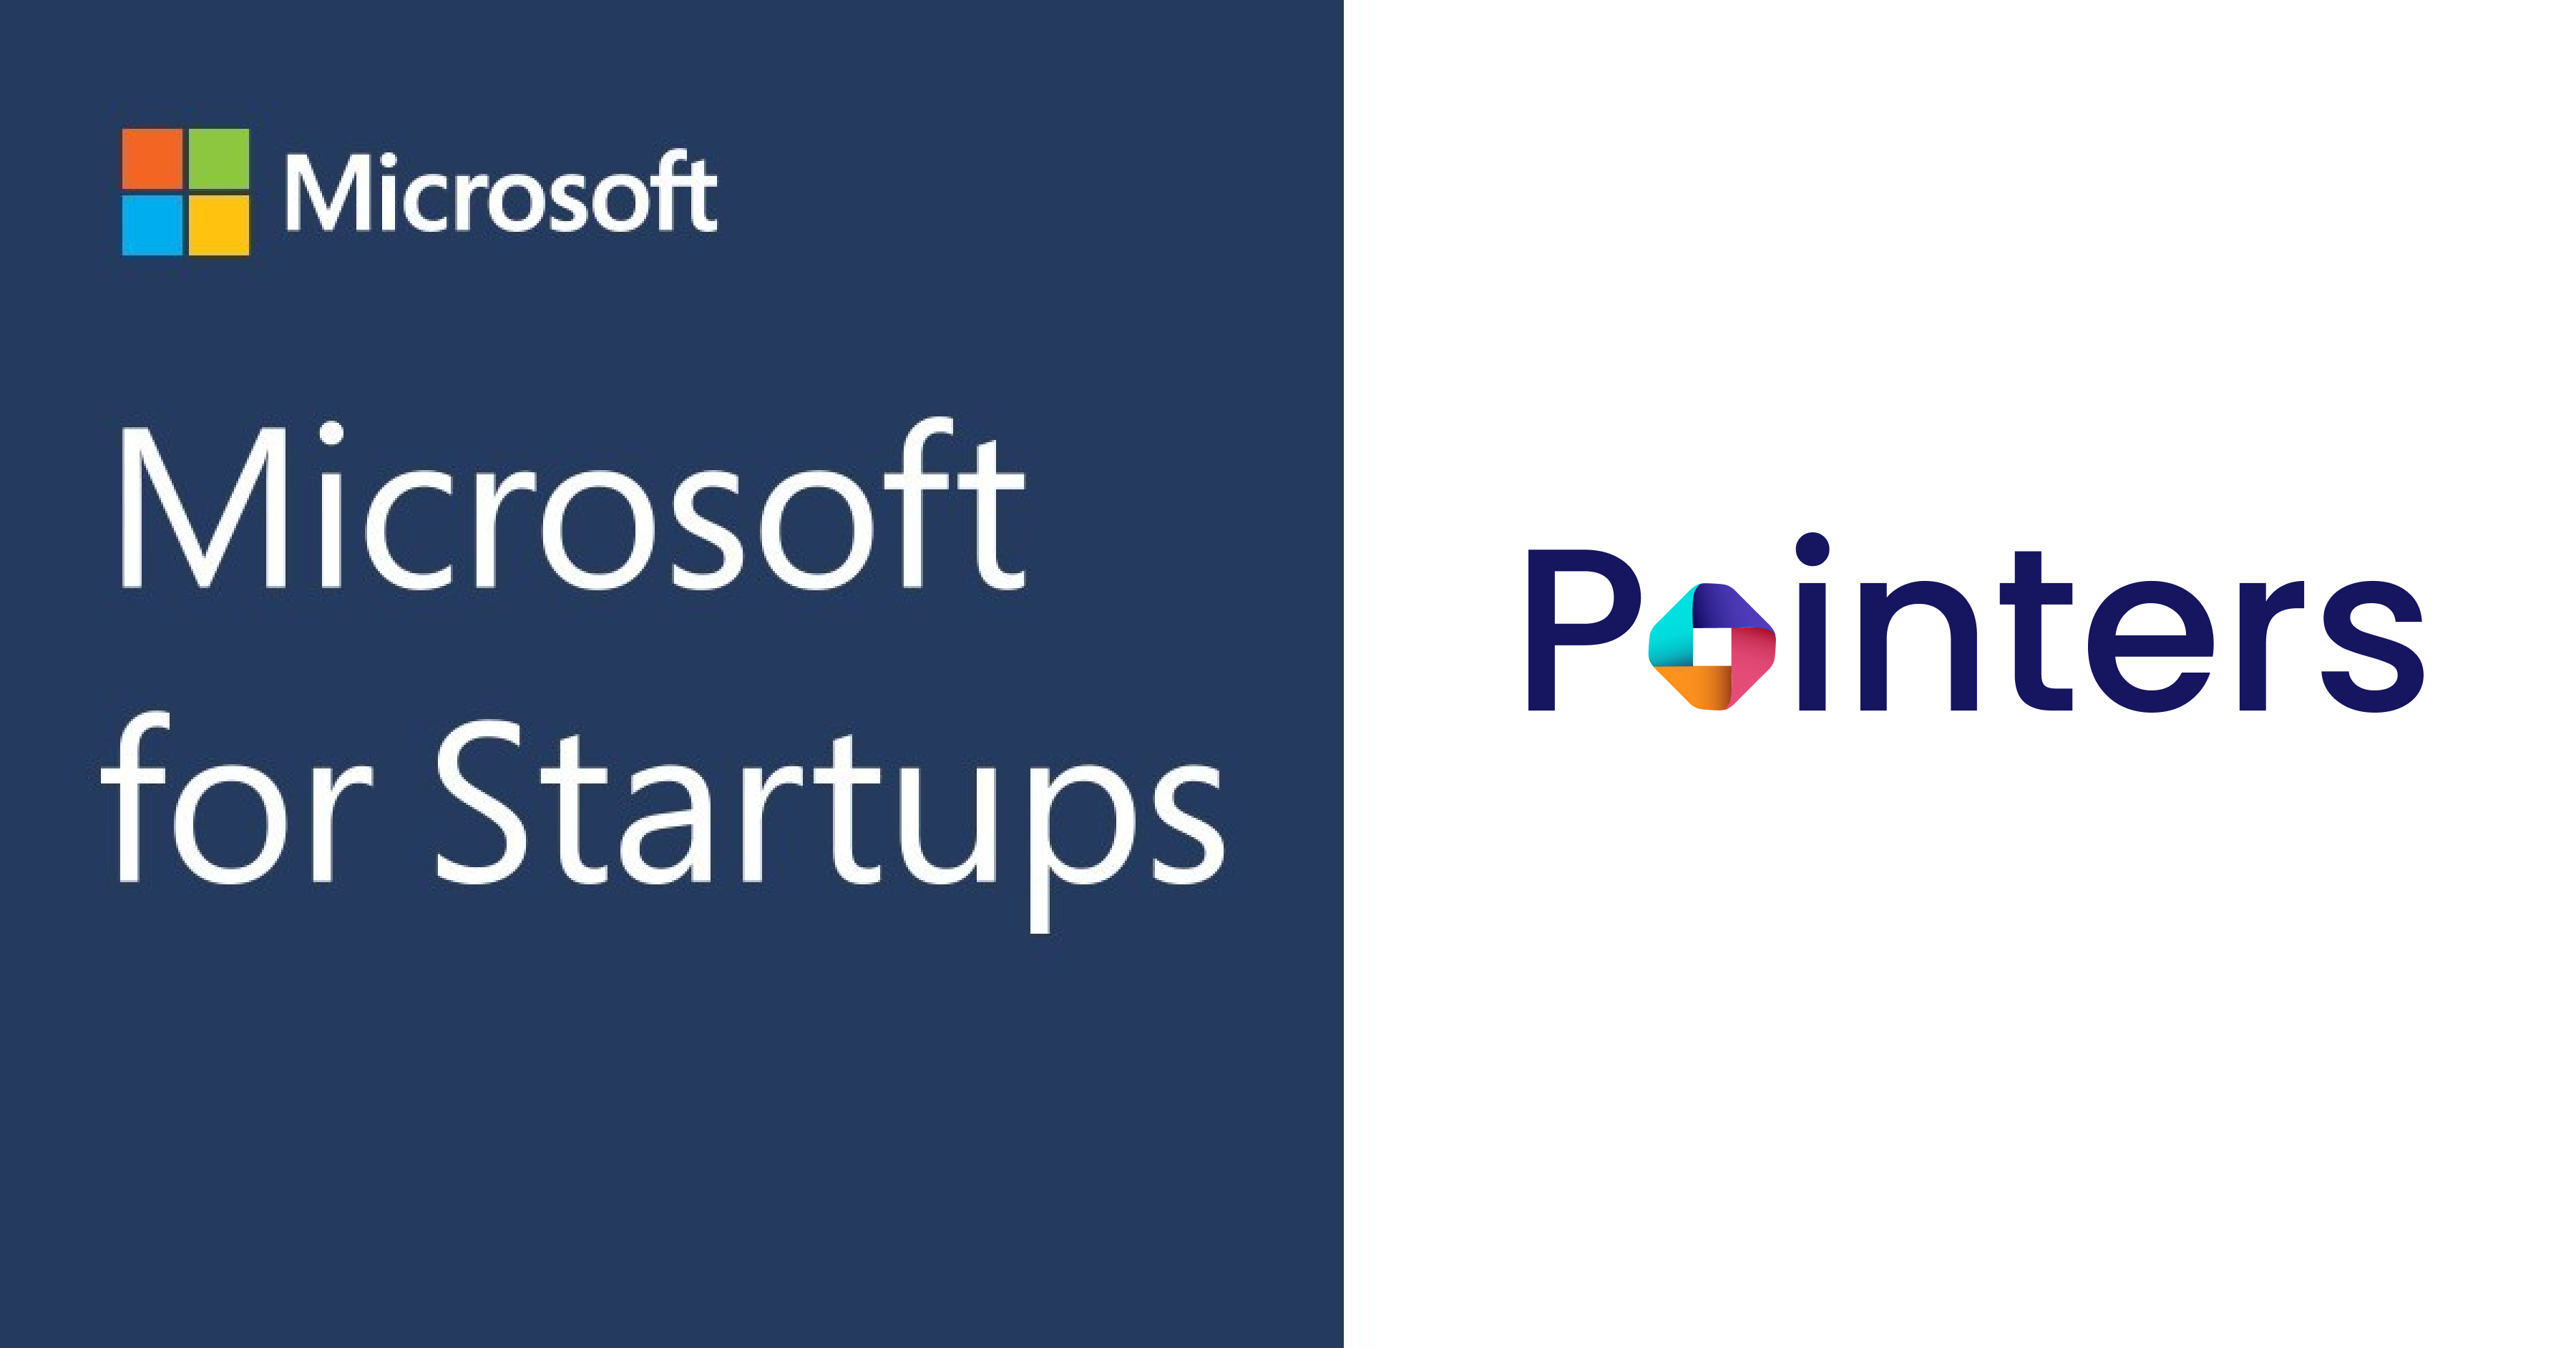 Our Partners • Microsoft Gold Partner • Databricks Partner • Data and AI